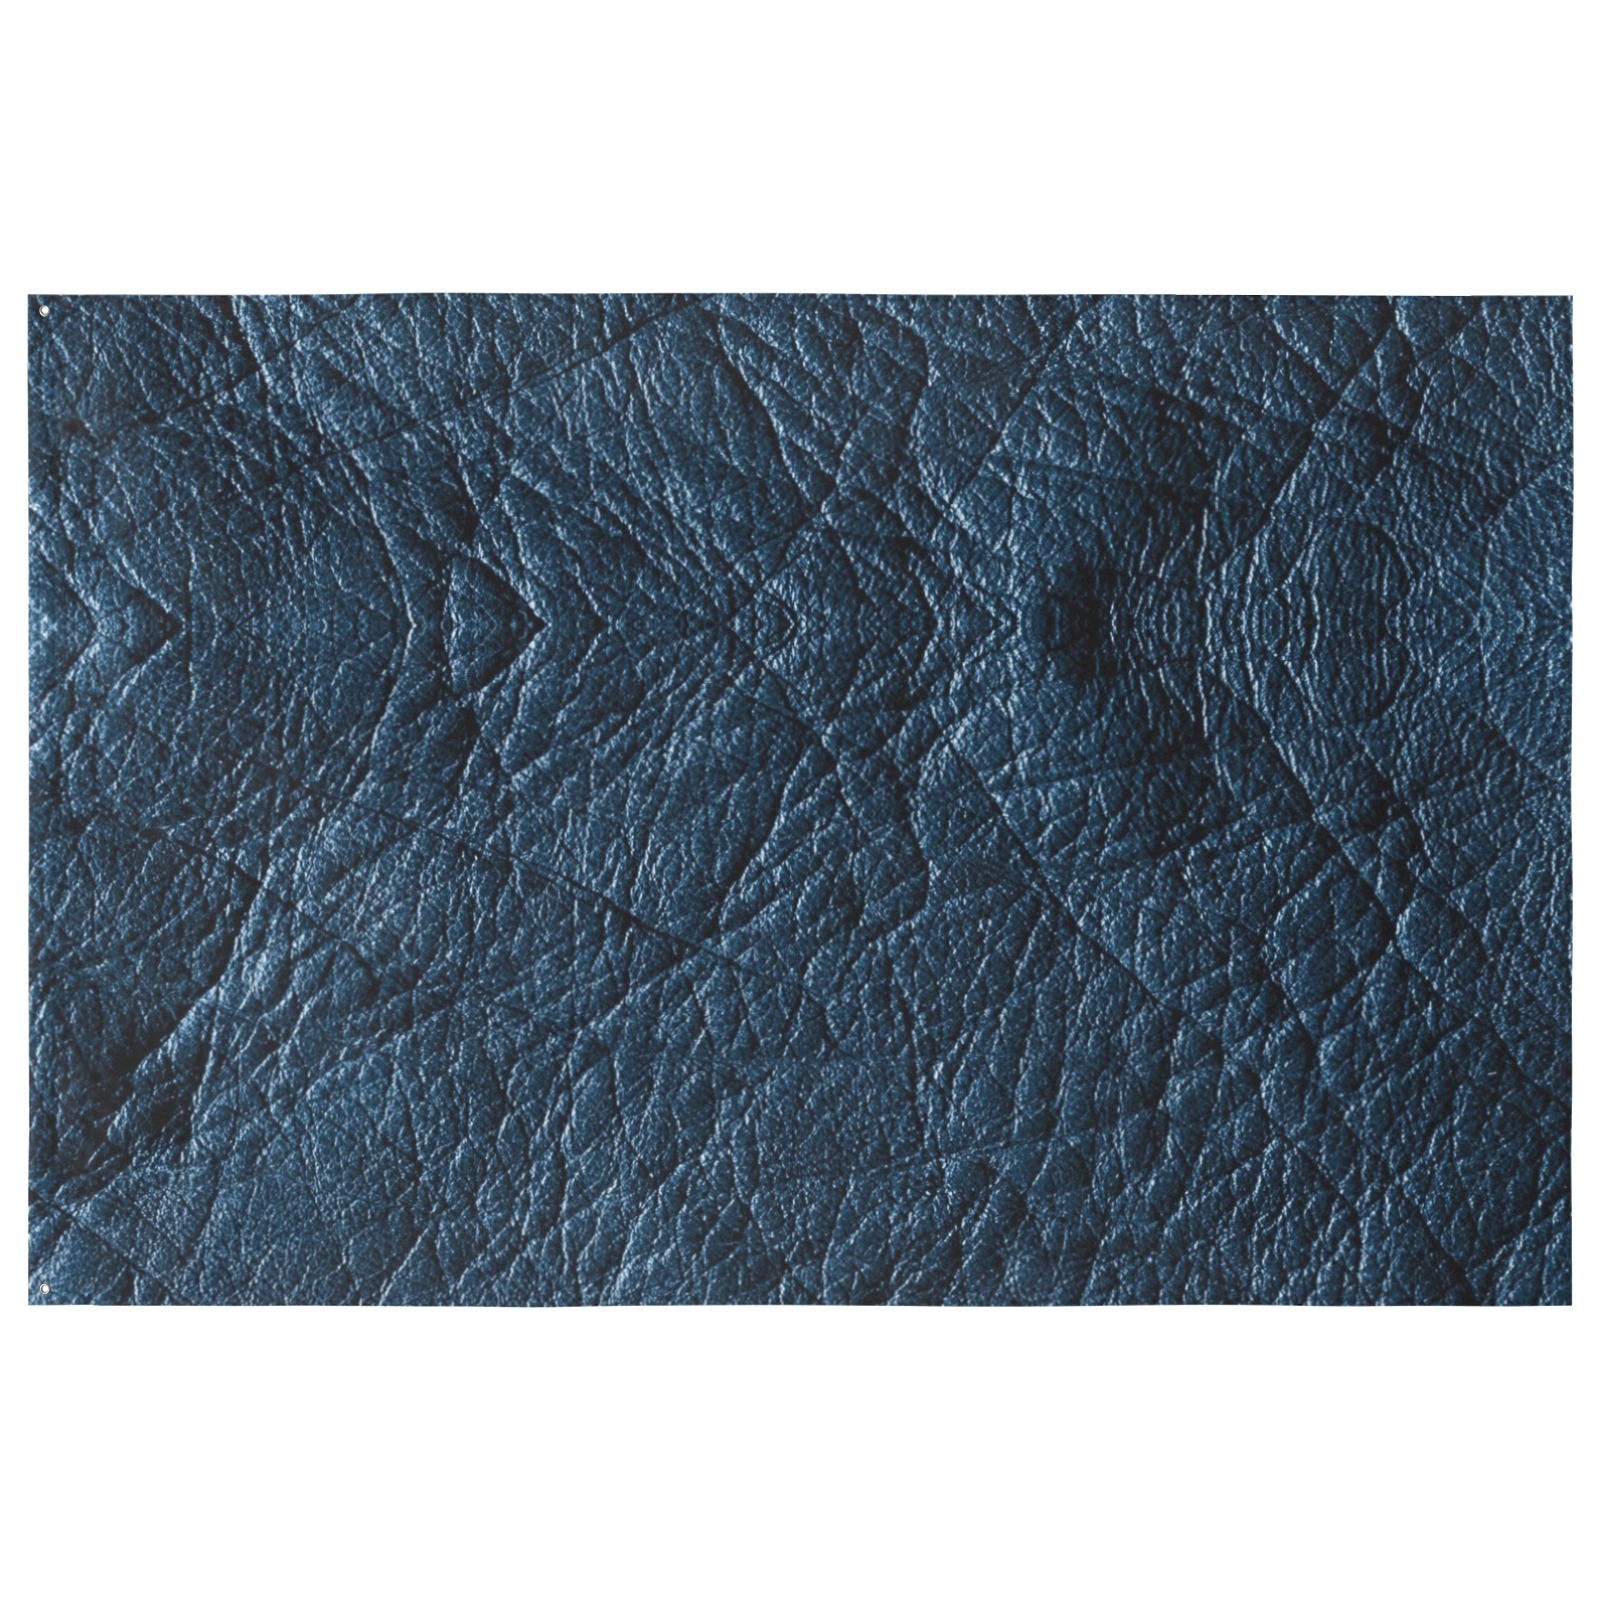 Leather Blue by Fetishworld Custom Flag 8x5 Ft (96"x60") (One Side)